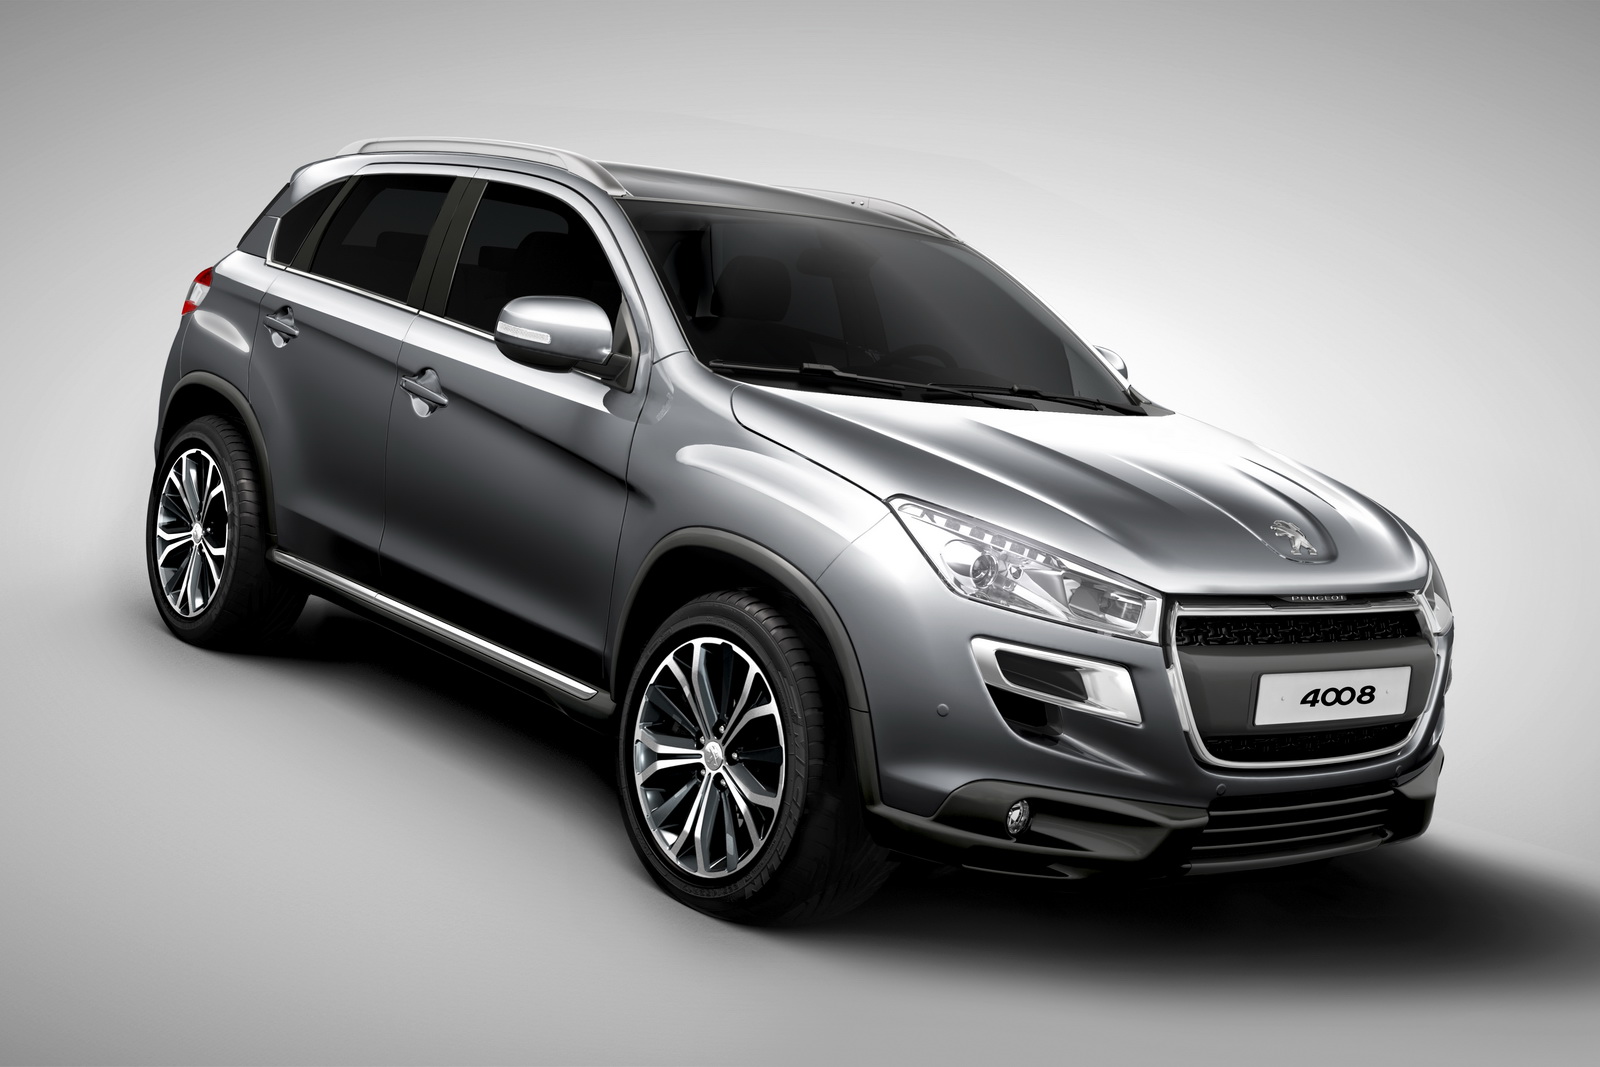 http://www.automotorblog.com/wp-content/uploads/2011/10/2012-Peugeot-4008-1.jpg